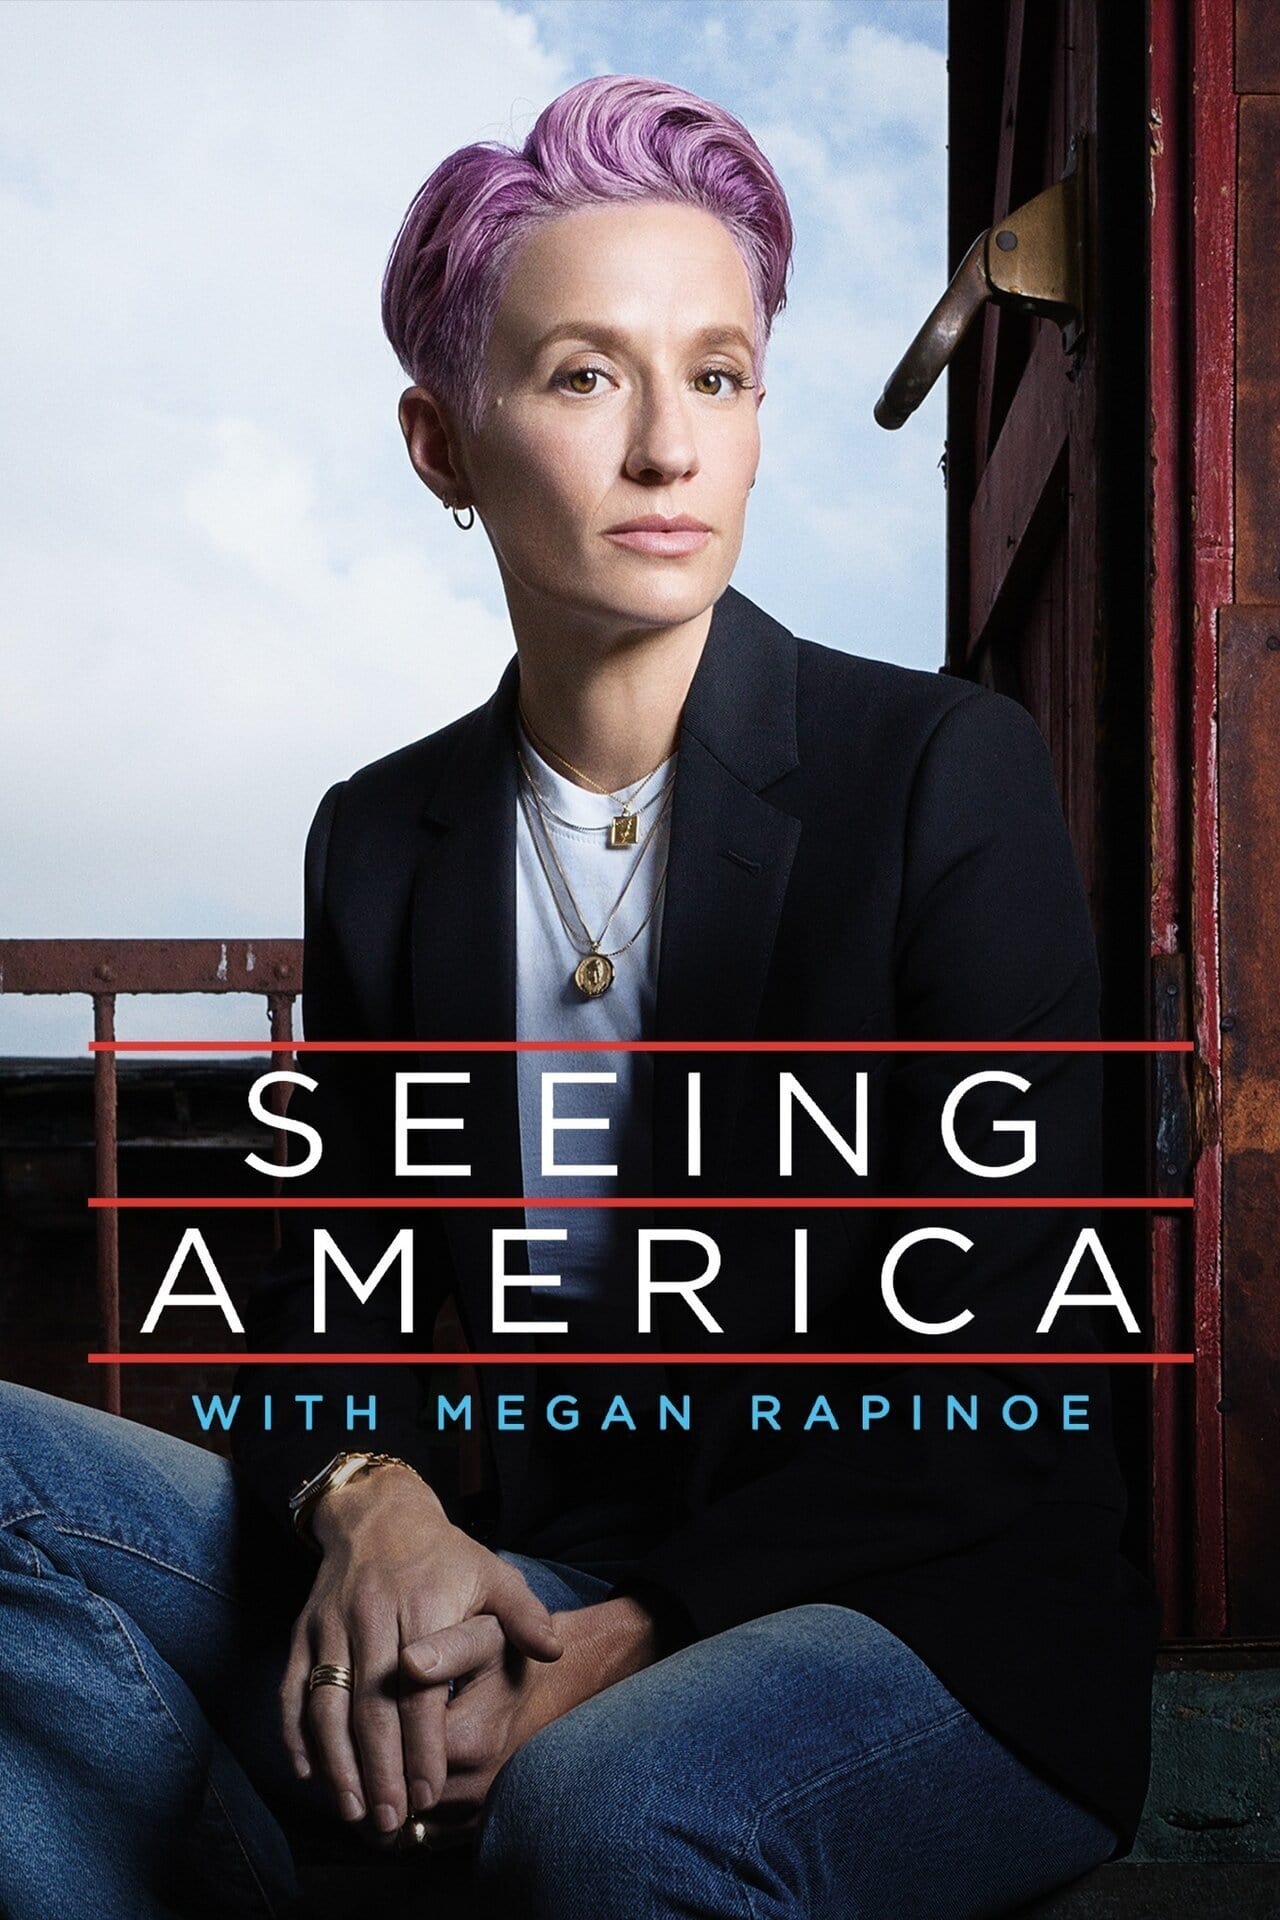 Seeing America with Megan Rapinoe